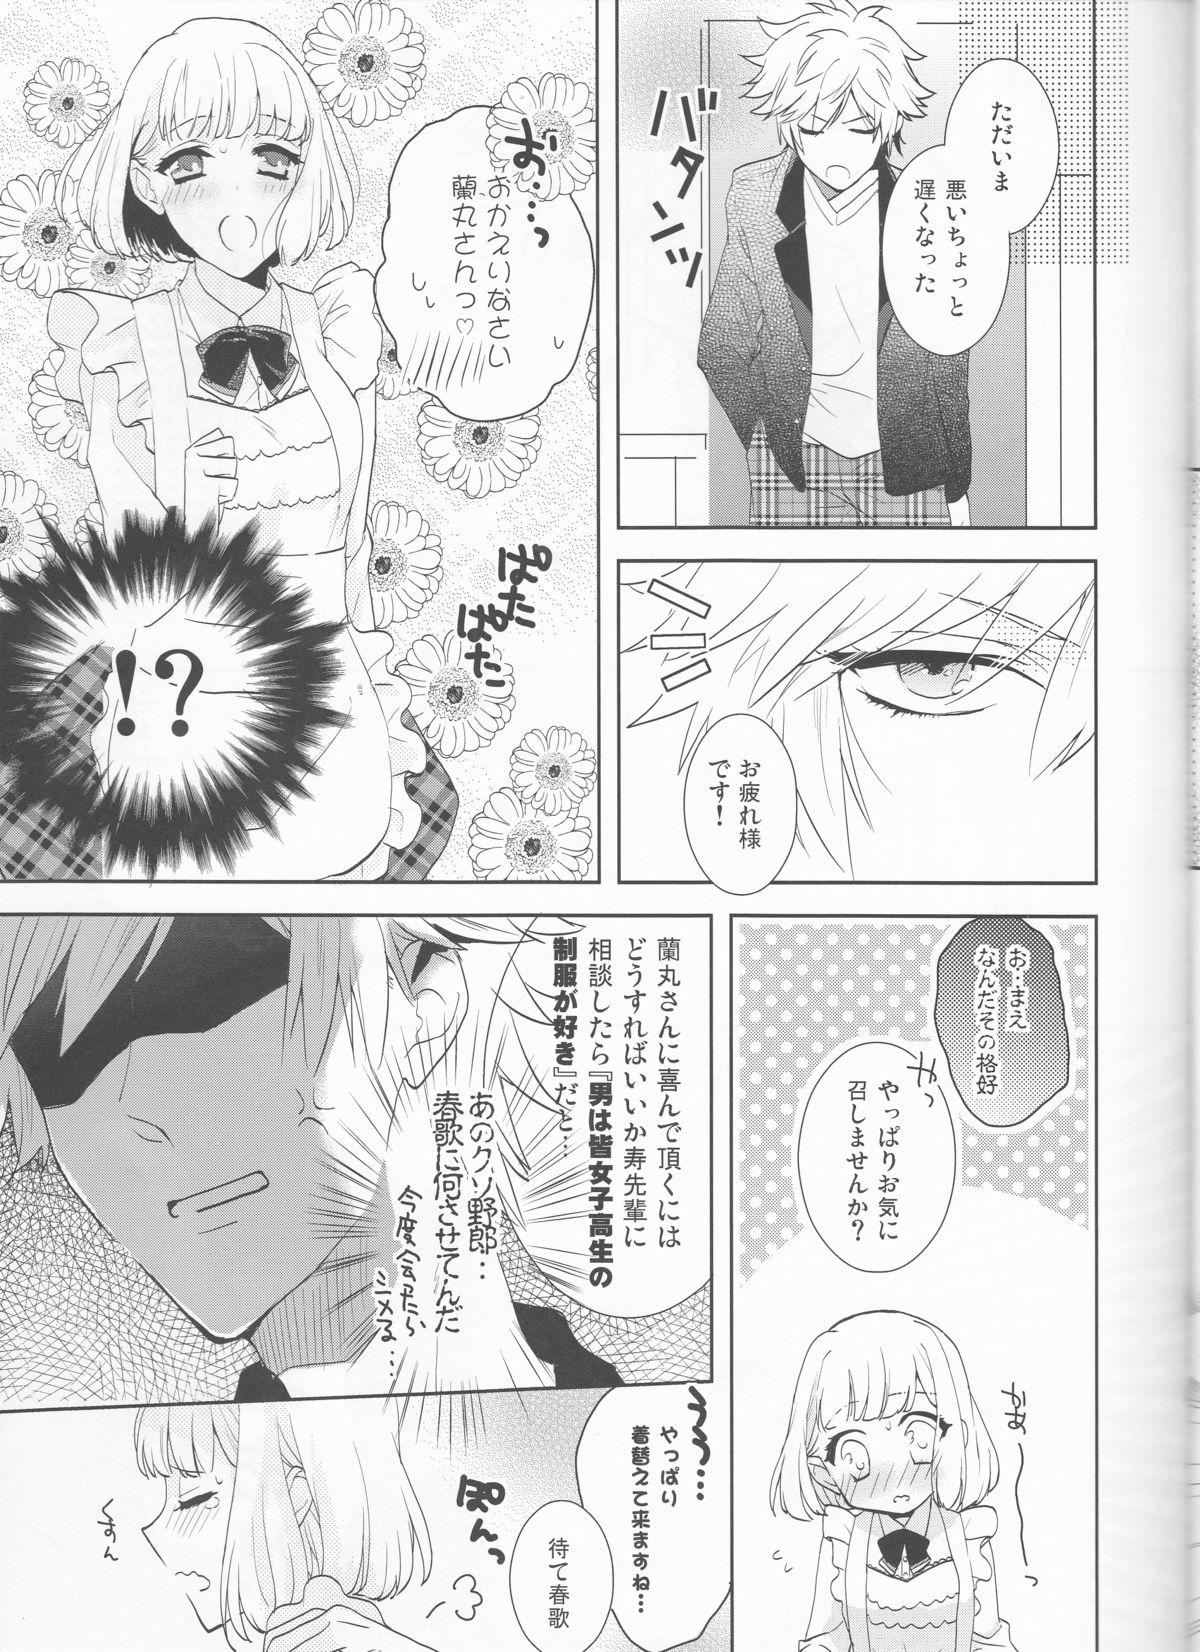 Huge Otona no Hajimari - Uta no prince-sama Gaypawn - Page 8